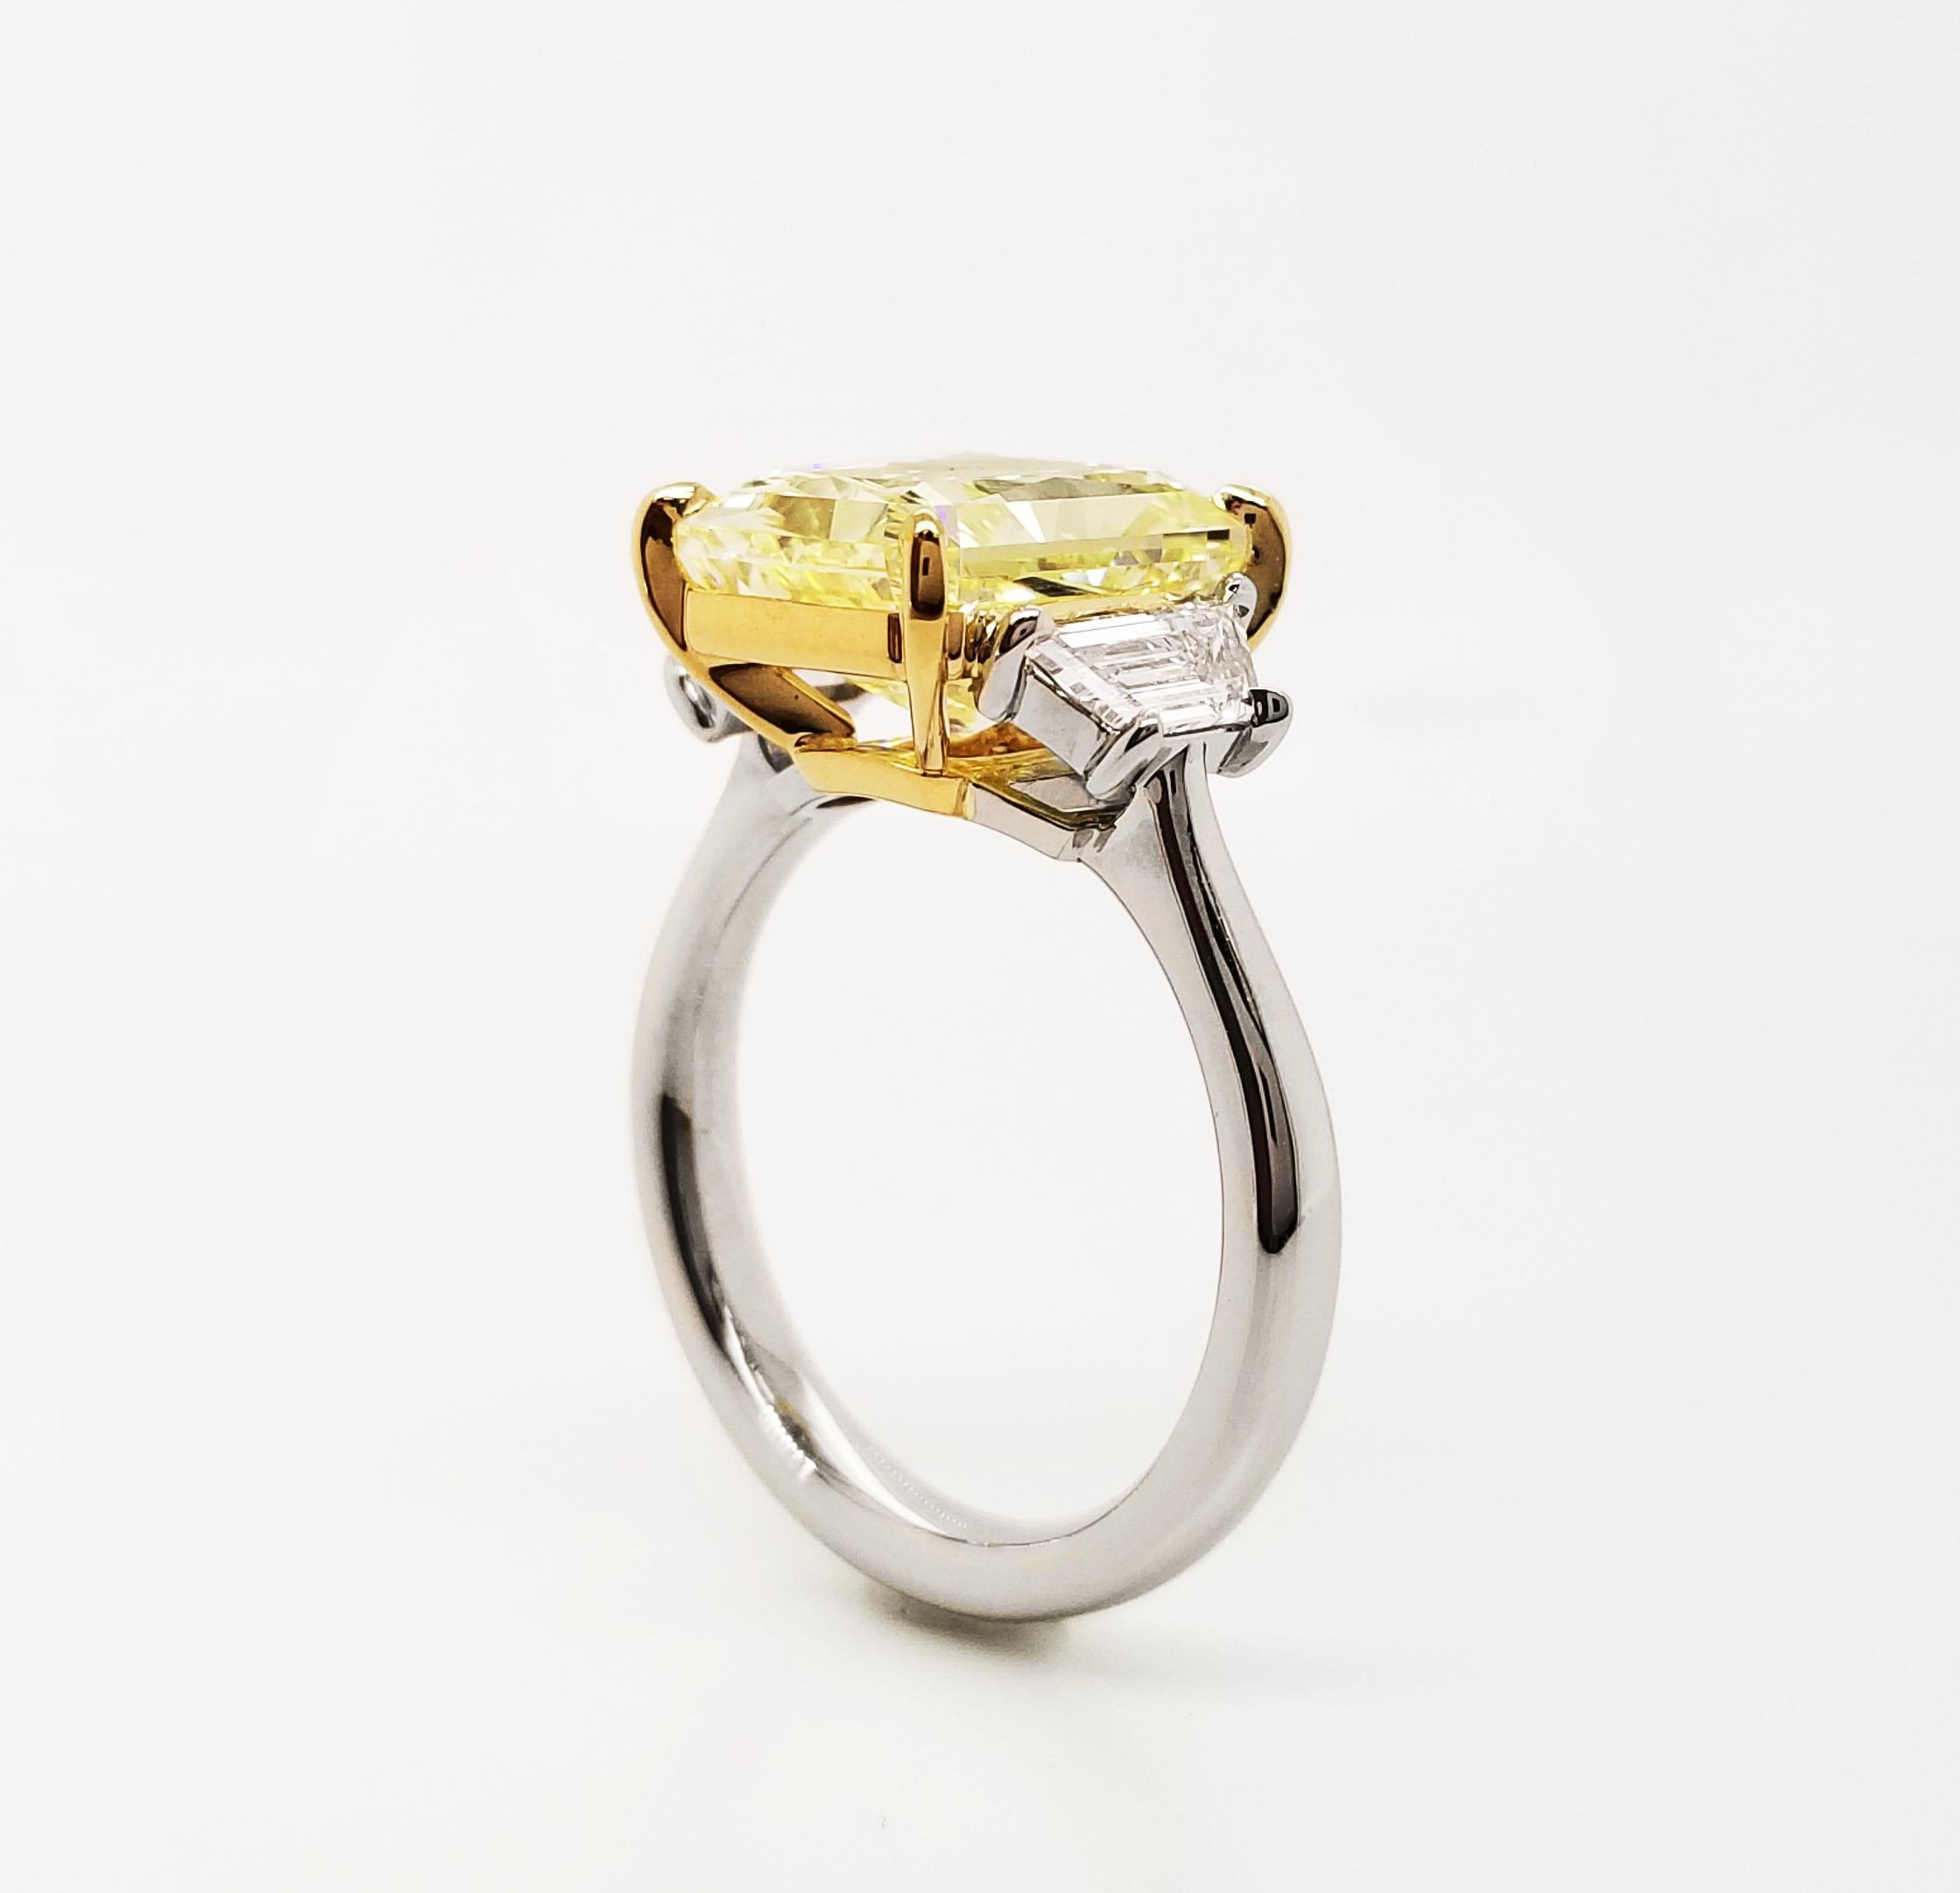 Contemporary Scarselli 5 Carat Fancy Yellow Diamond Ring in Platinum & 18k